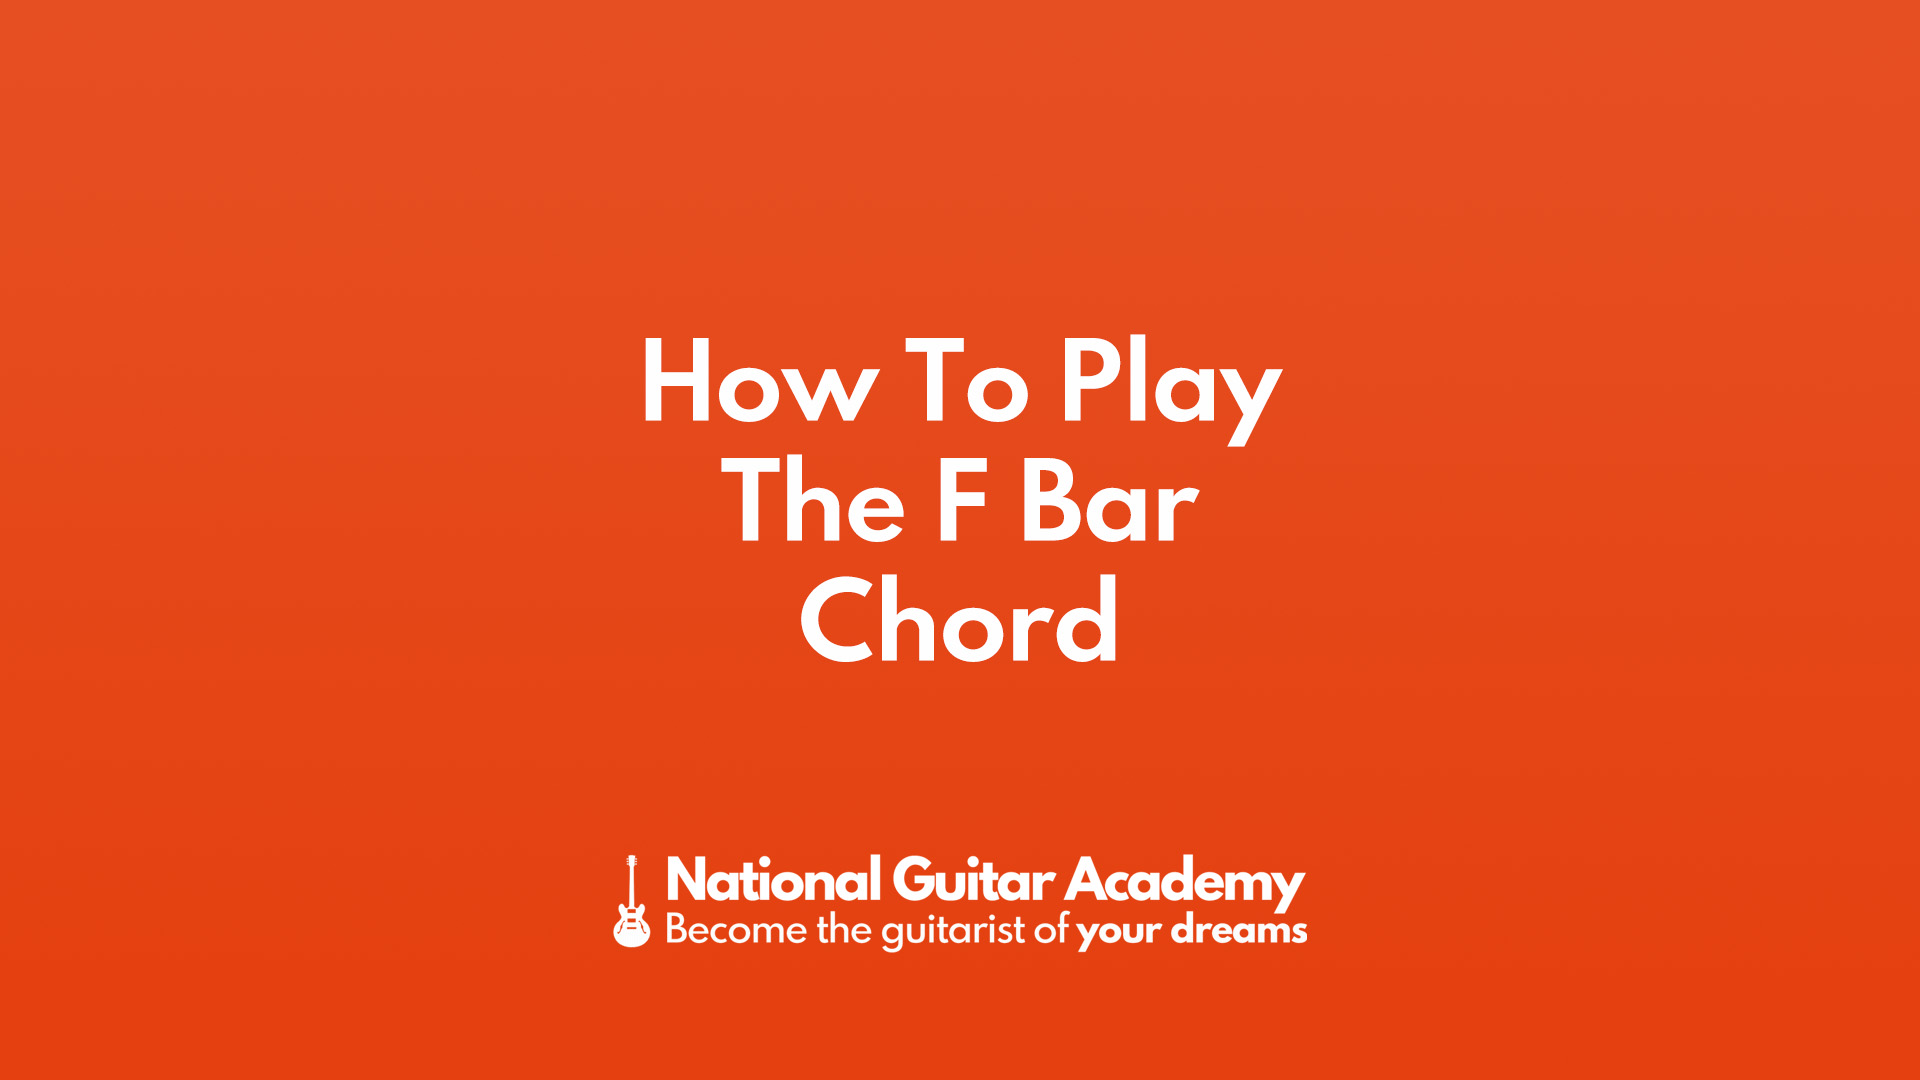 f bar chord help